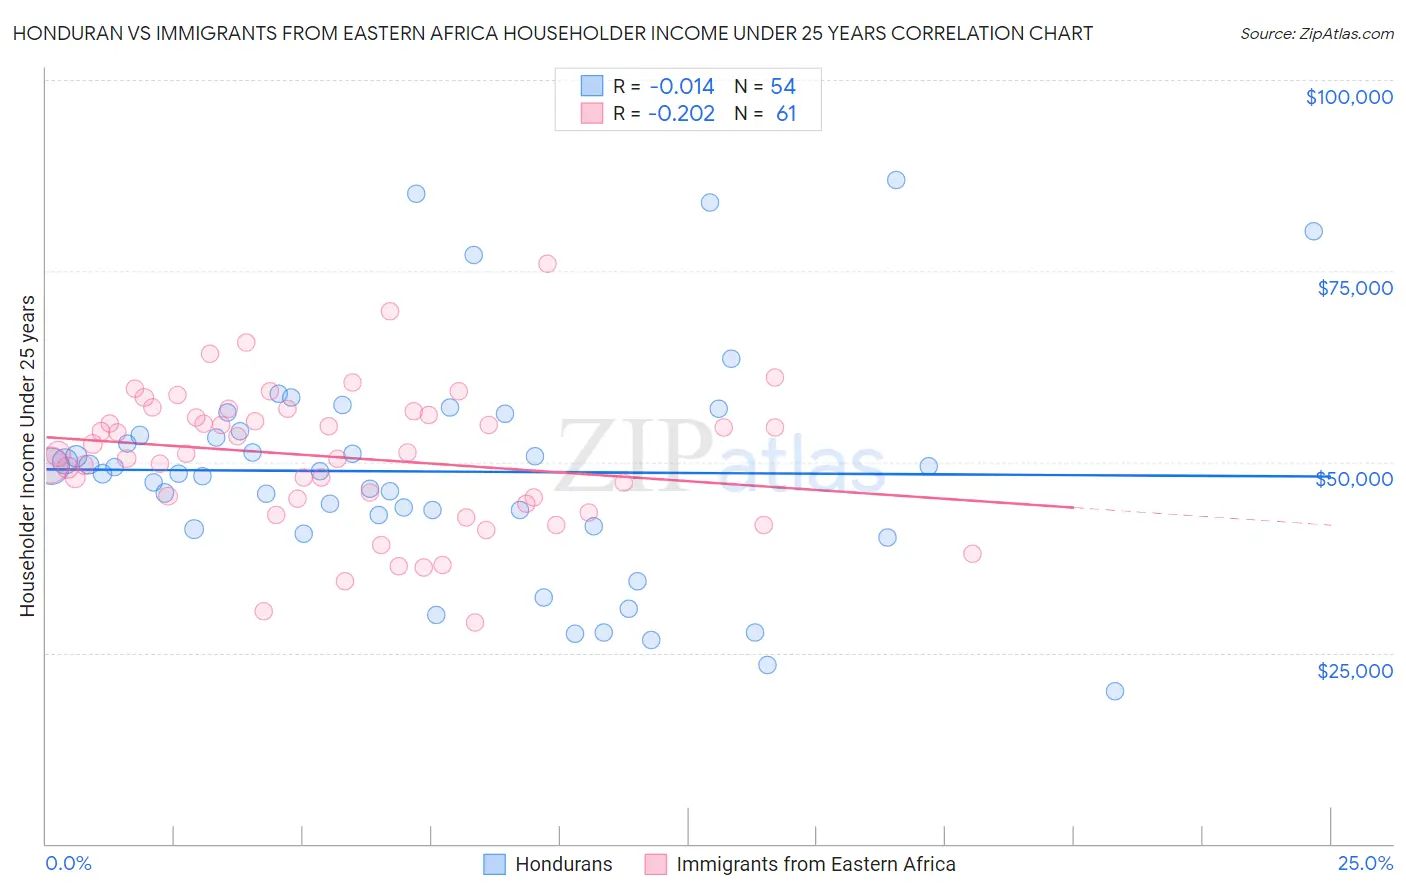 Honduran vs Immigrants from Eastern Africa Householder Income Under 25 years